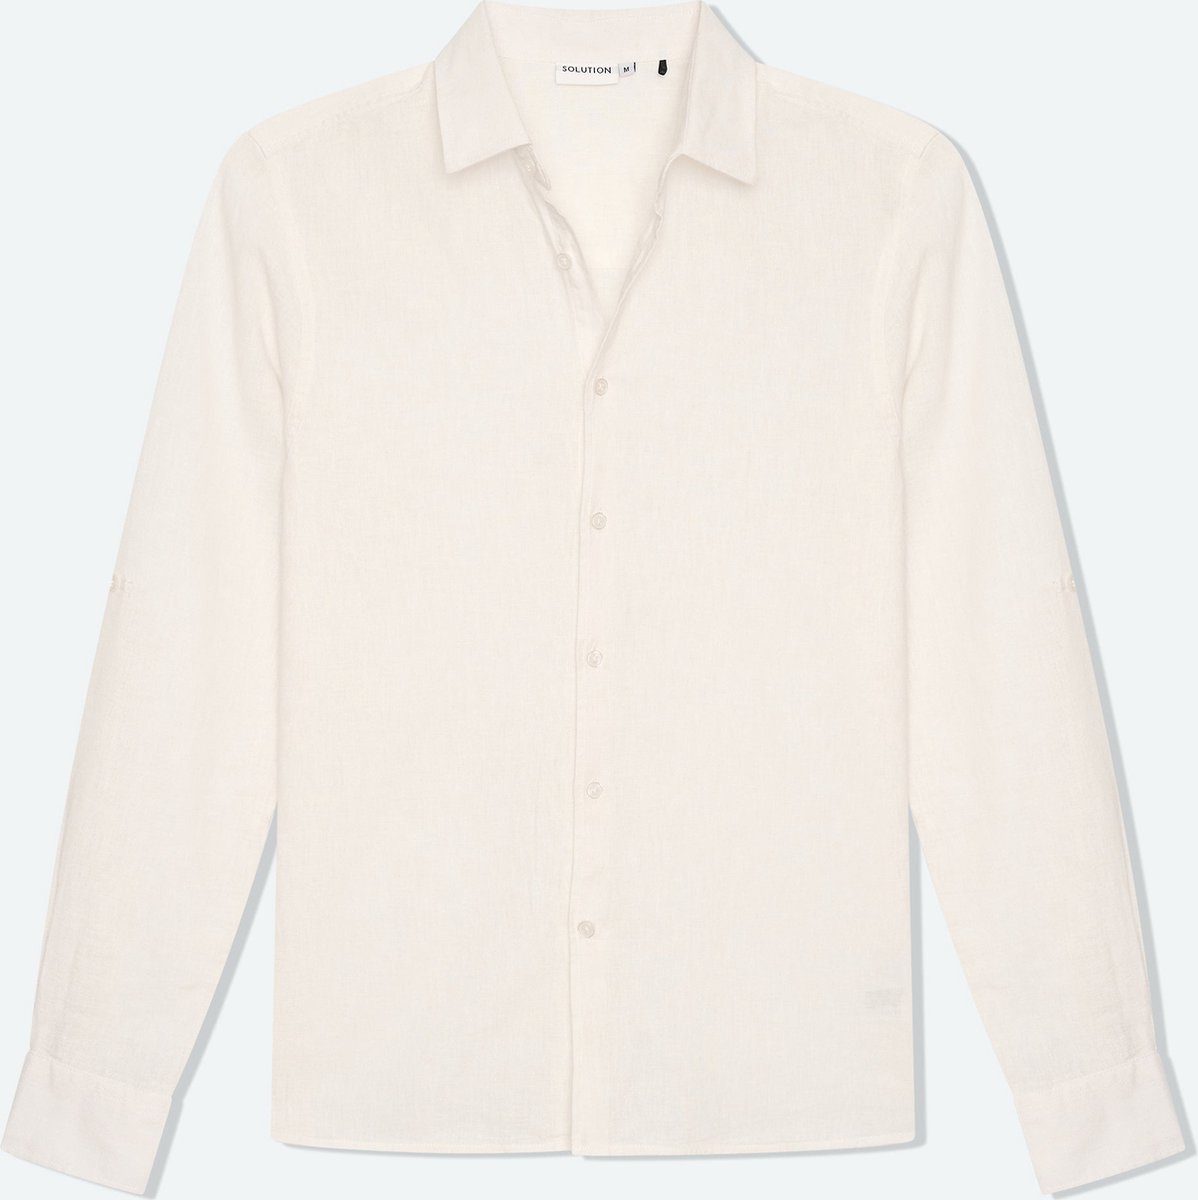 Solution Clothing Lean - Casual Overhemd - Shirt - Lange Mouwen - Regular Fit - Volwassenen - Heren - Mannen - Wit - L - L - Solution Clothing